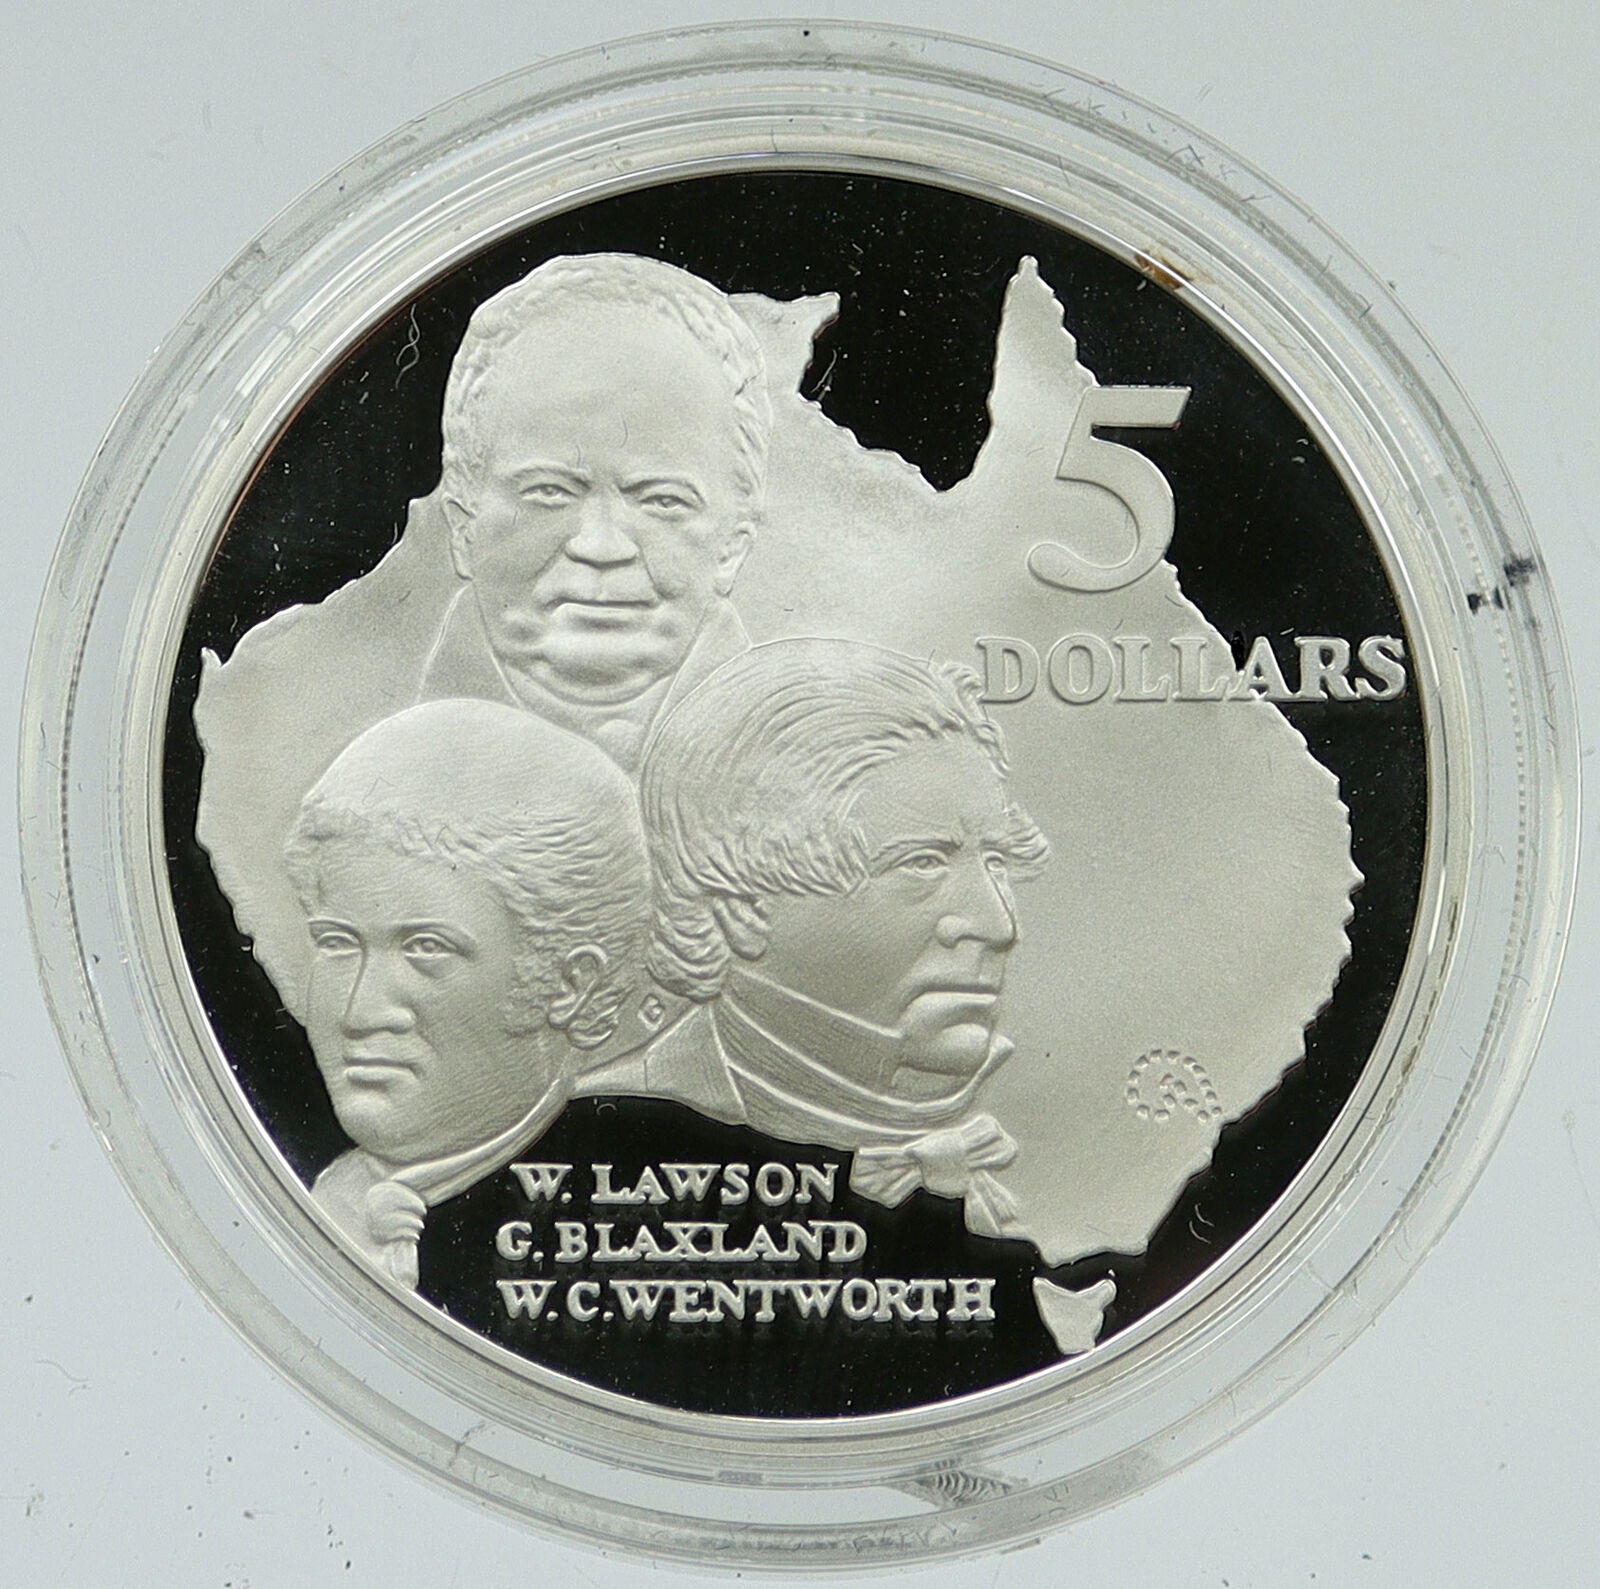 1993 AUSTRALIA Explorers Lawson Blaxland Wentwort Proof Silver $5 Coin i116593